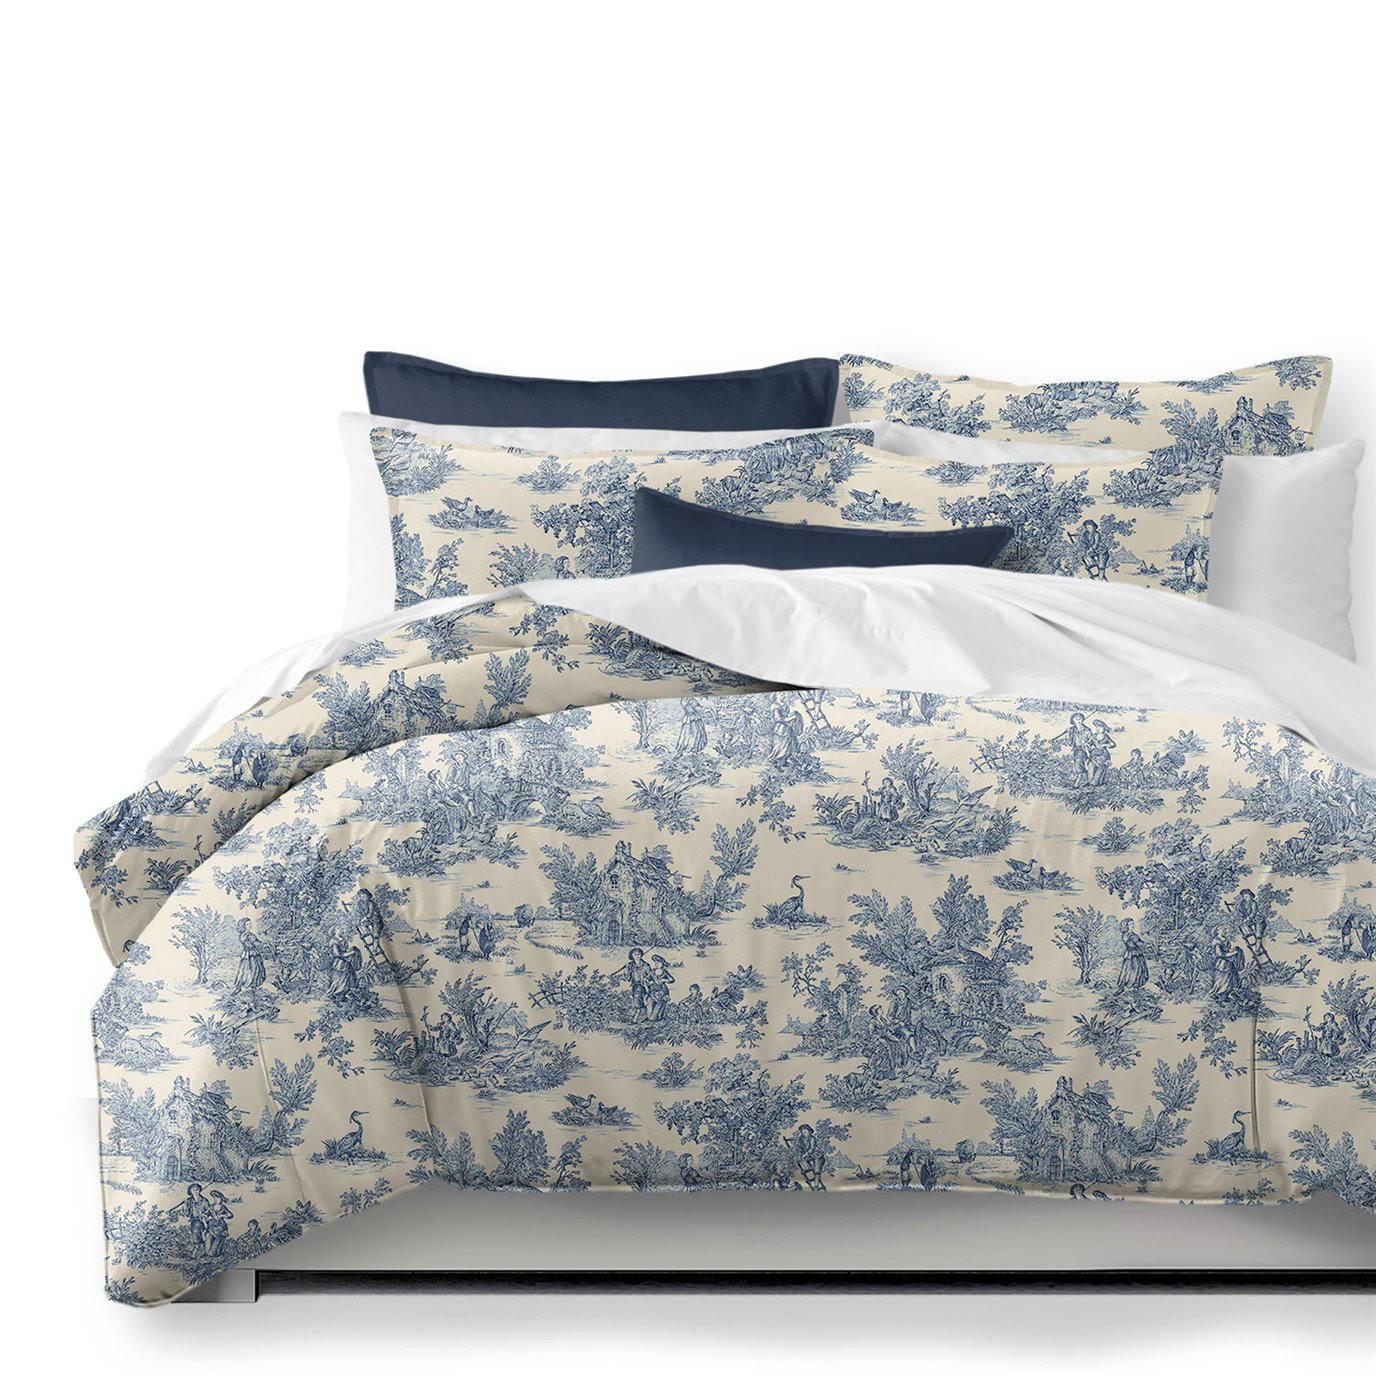 Bouclair Blue Comforter and Pillow Sham(s) Set - Size King / California King